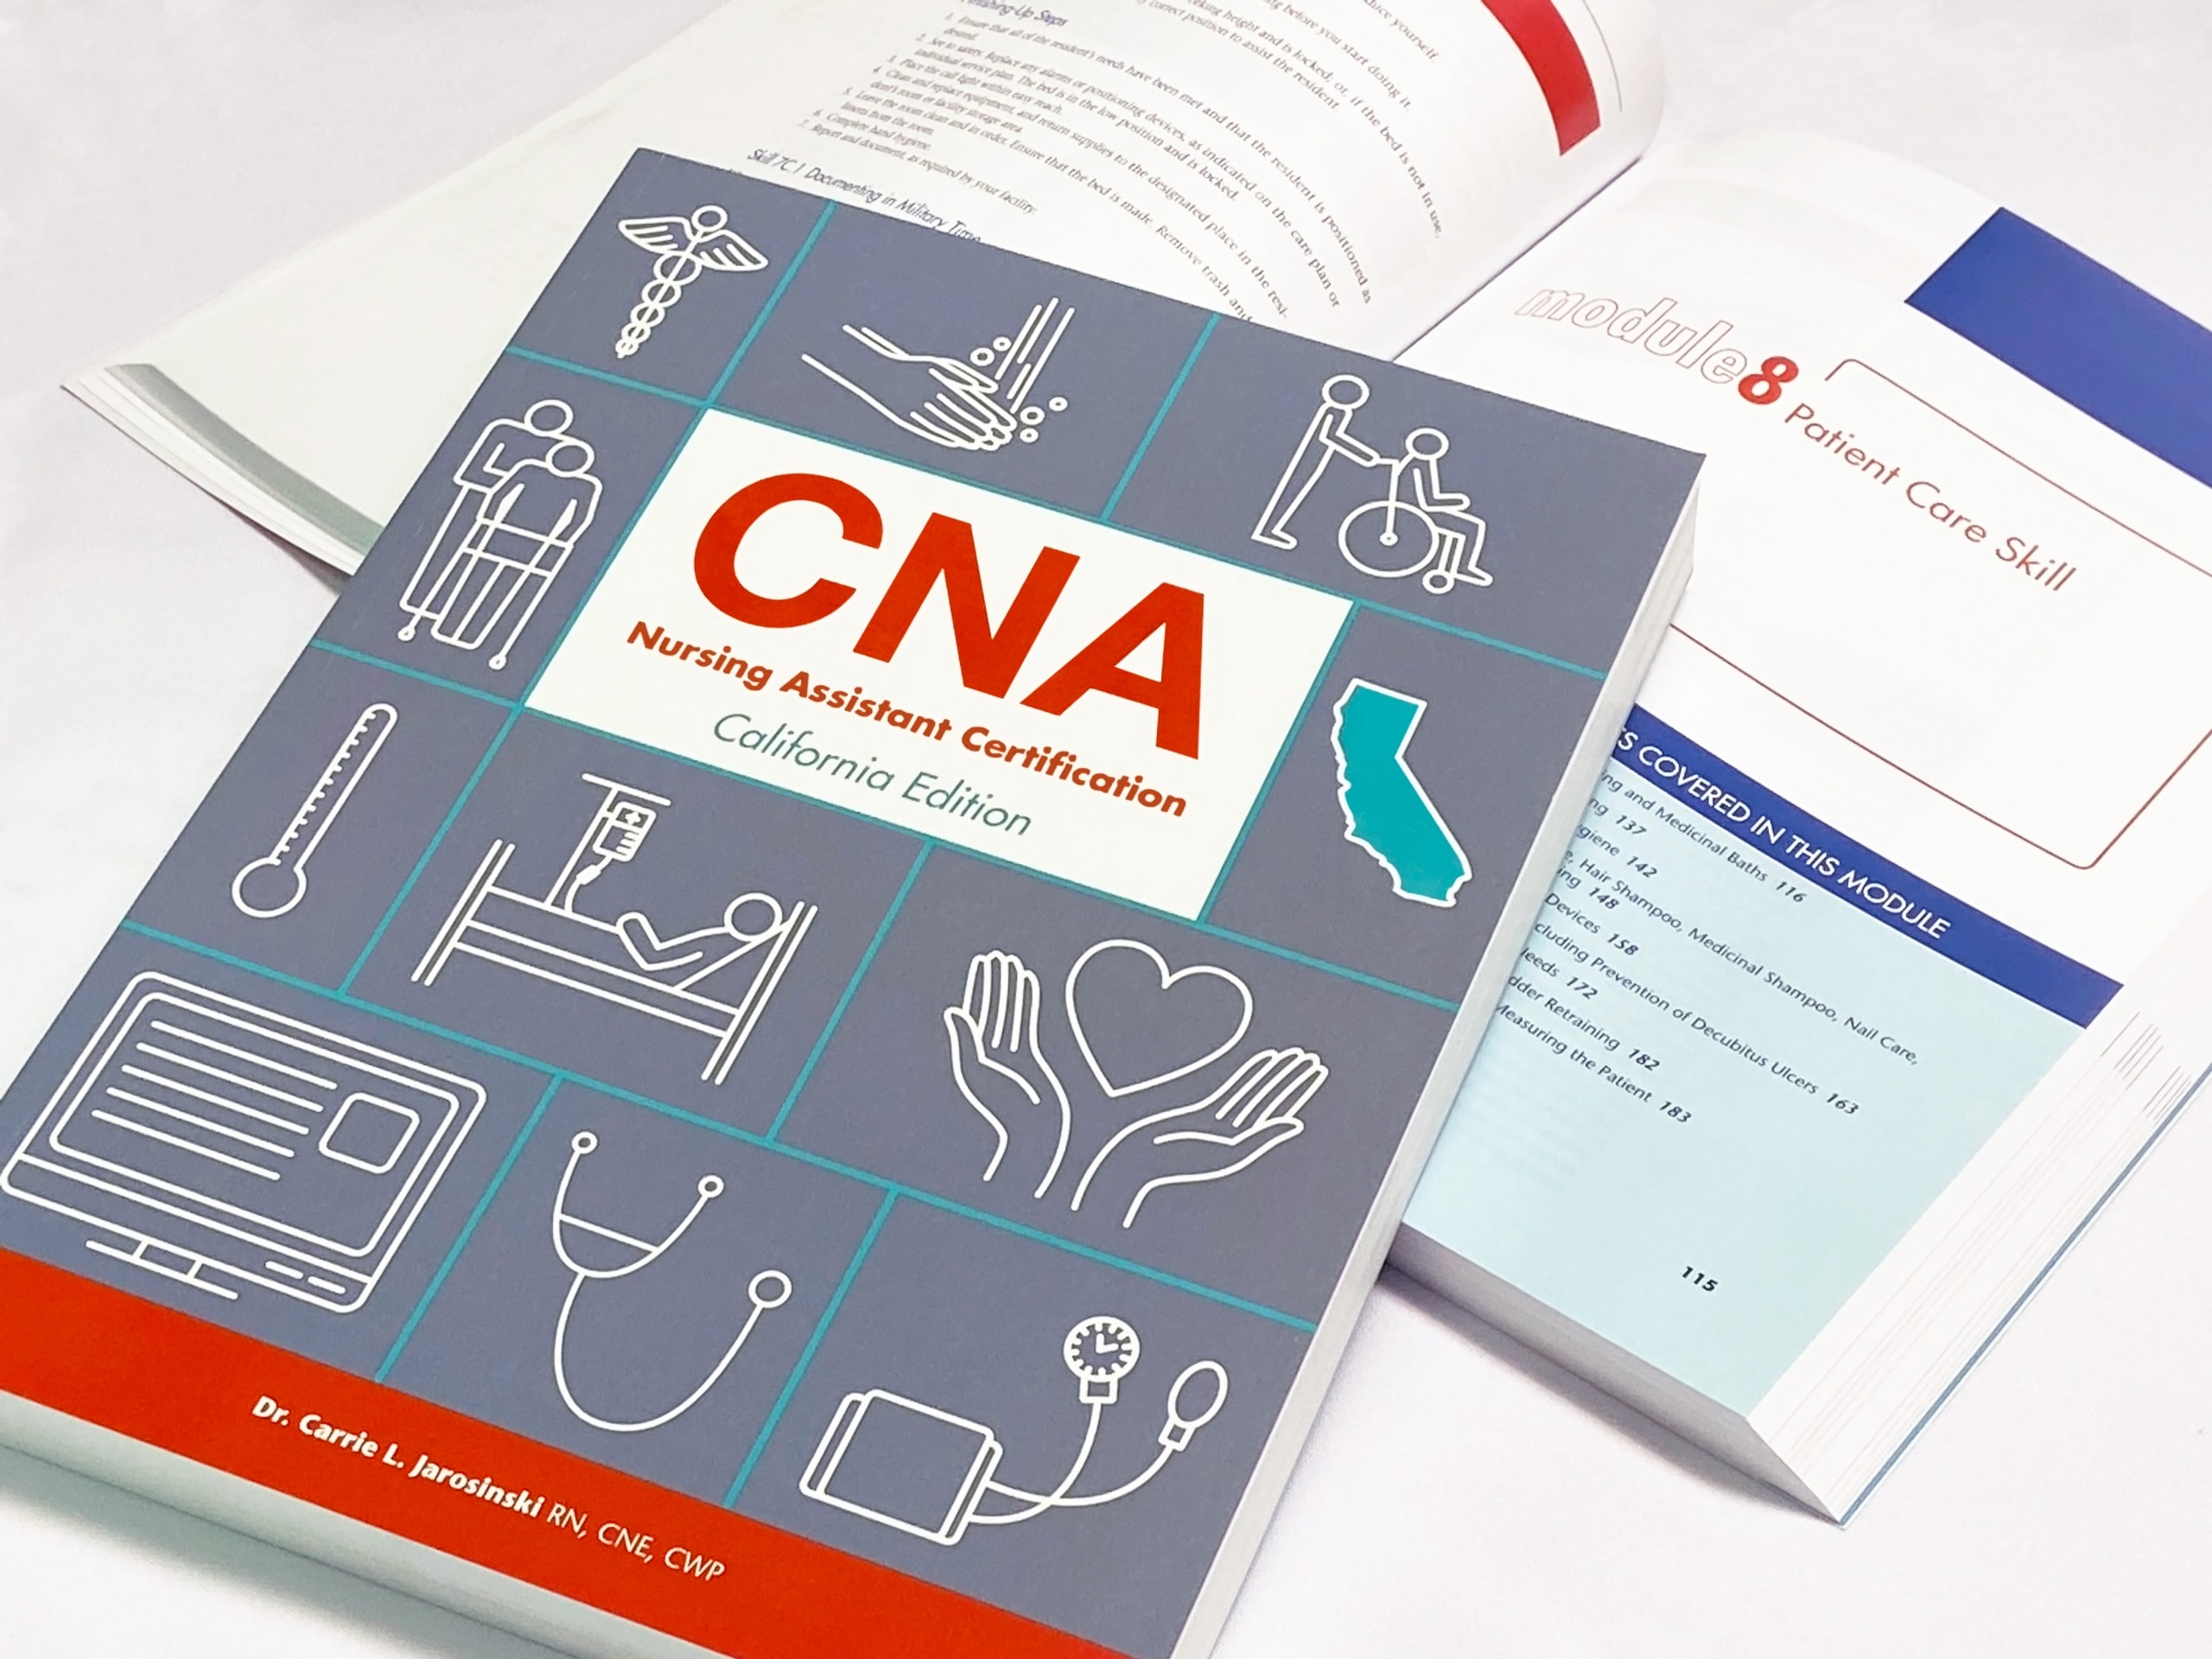 CNA Nursing Assistant Certification California Edition